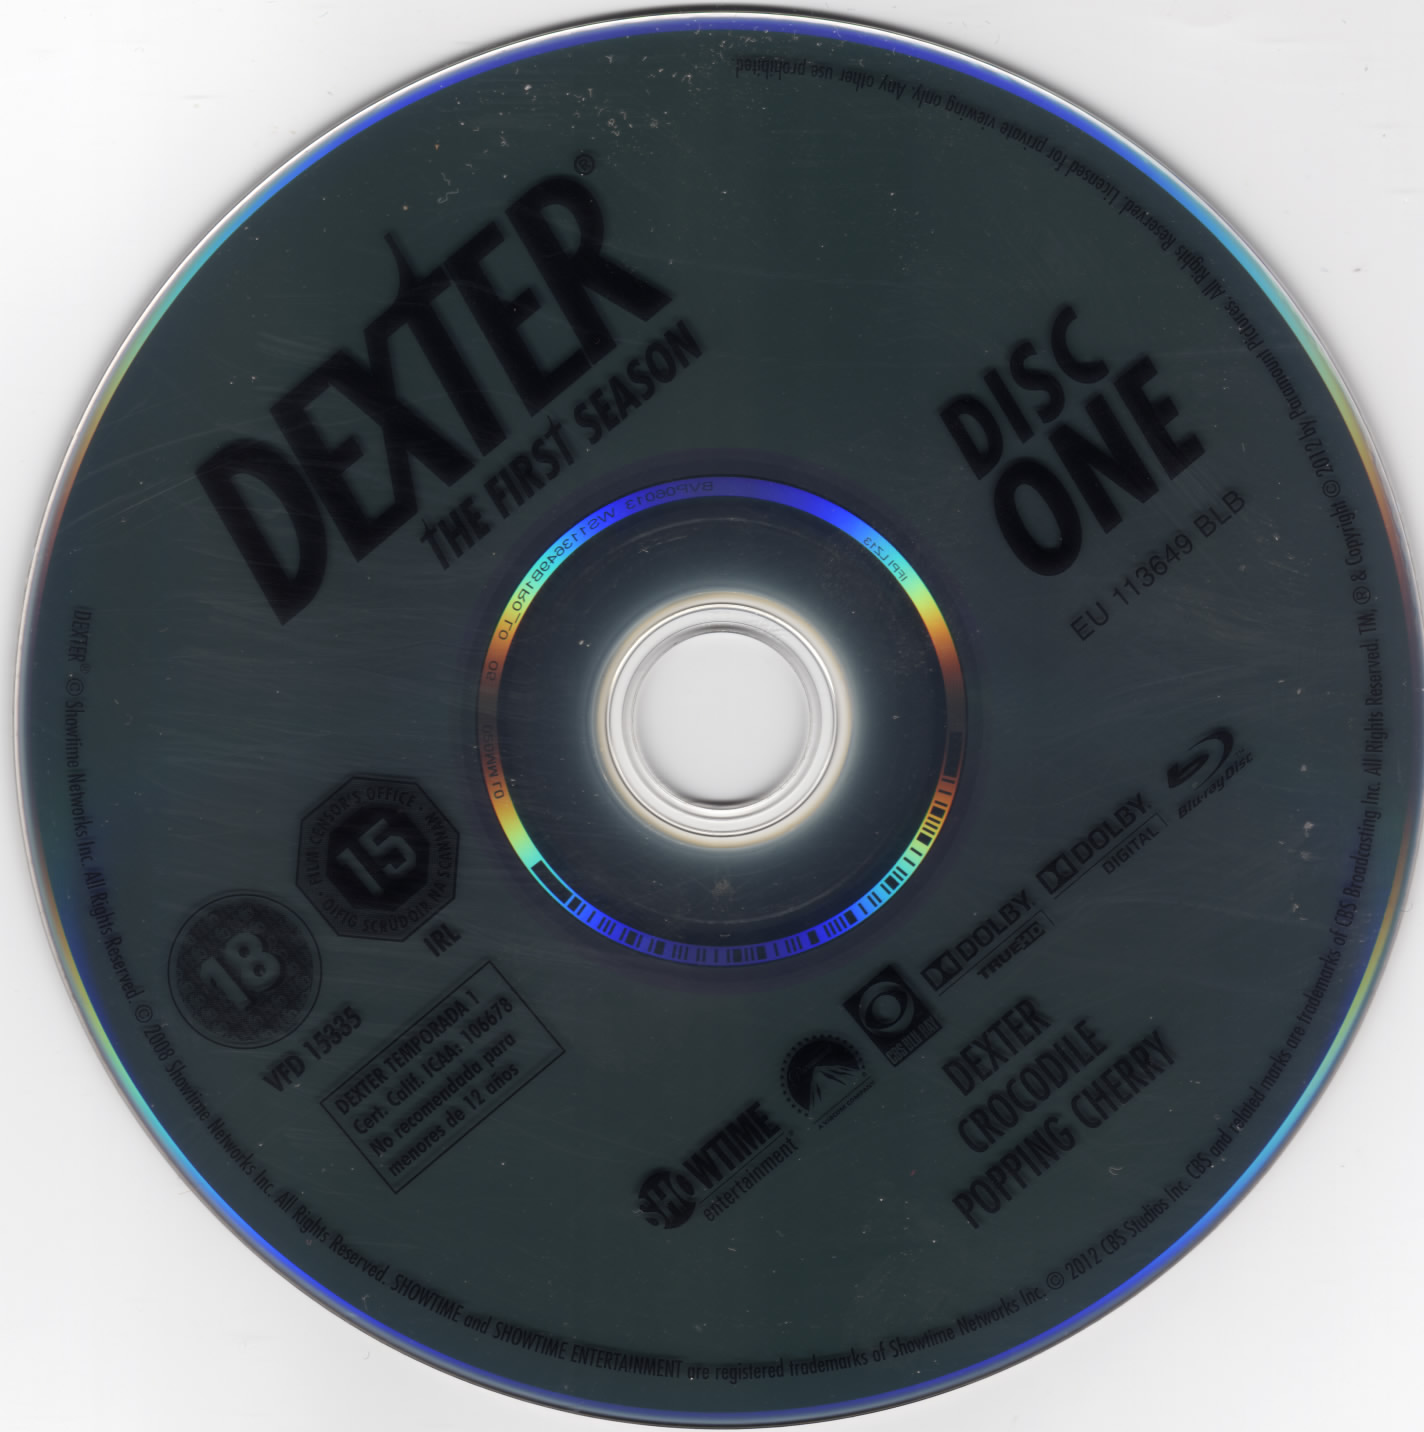 Dexter saison 1 DISC 1 (BLU-RAY)